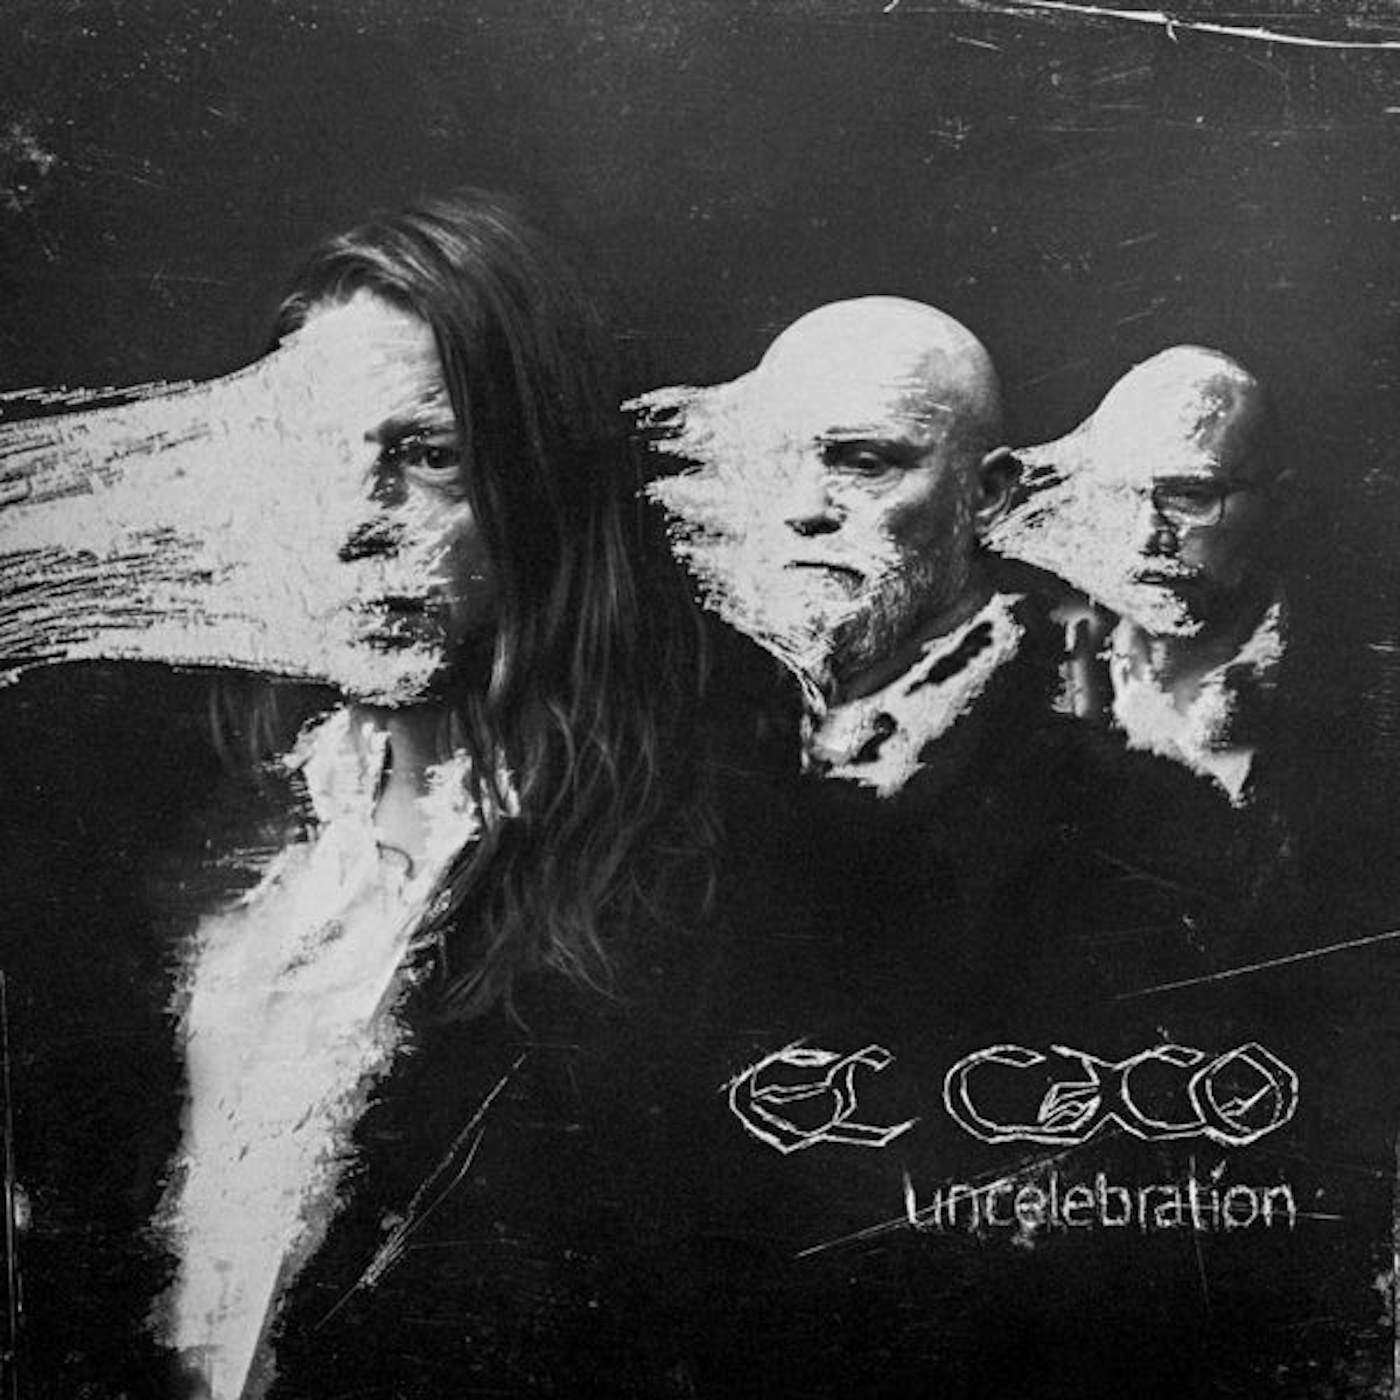 El Caco LP - Uncelebration (White Vinyl)